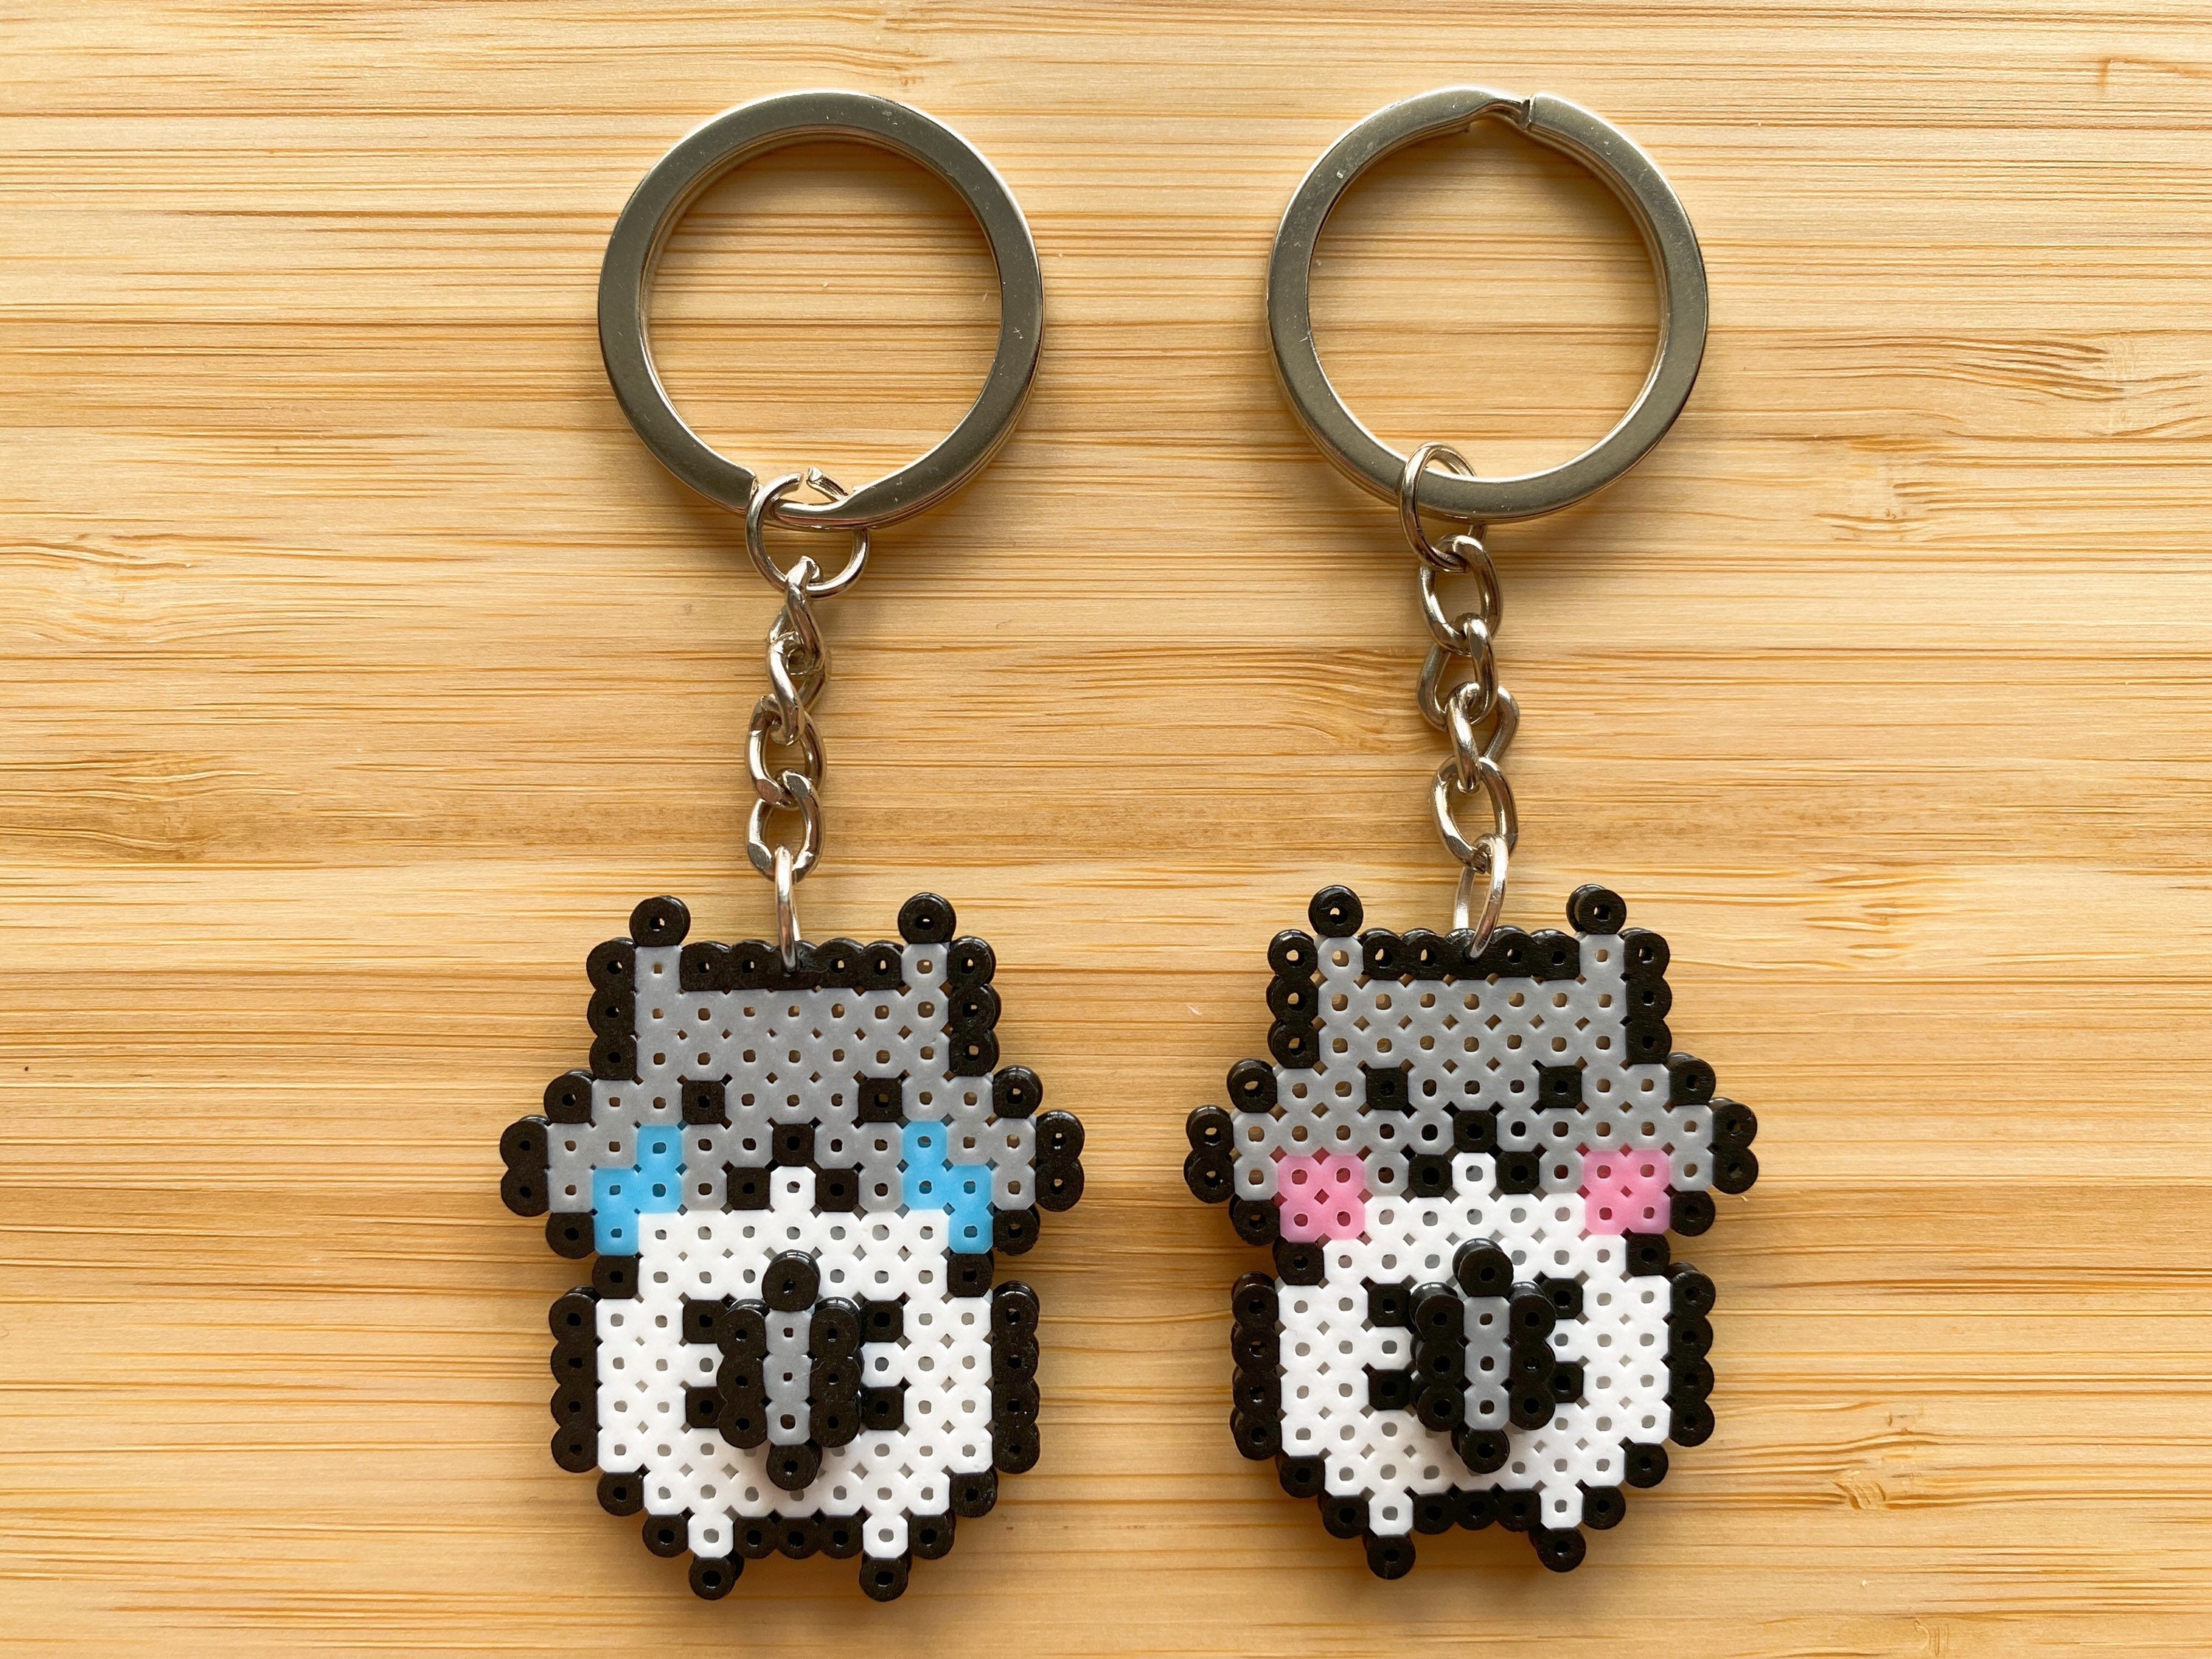 Kawaii Cat 8bit Pixel Perler Beads Art, Can Be Fridge Magnet, Keychain,  Phone Charm and Badge. 